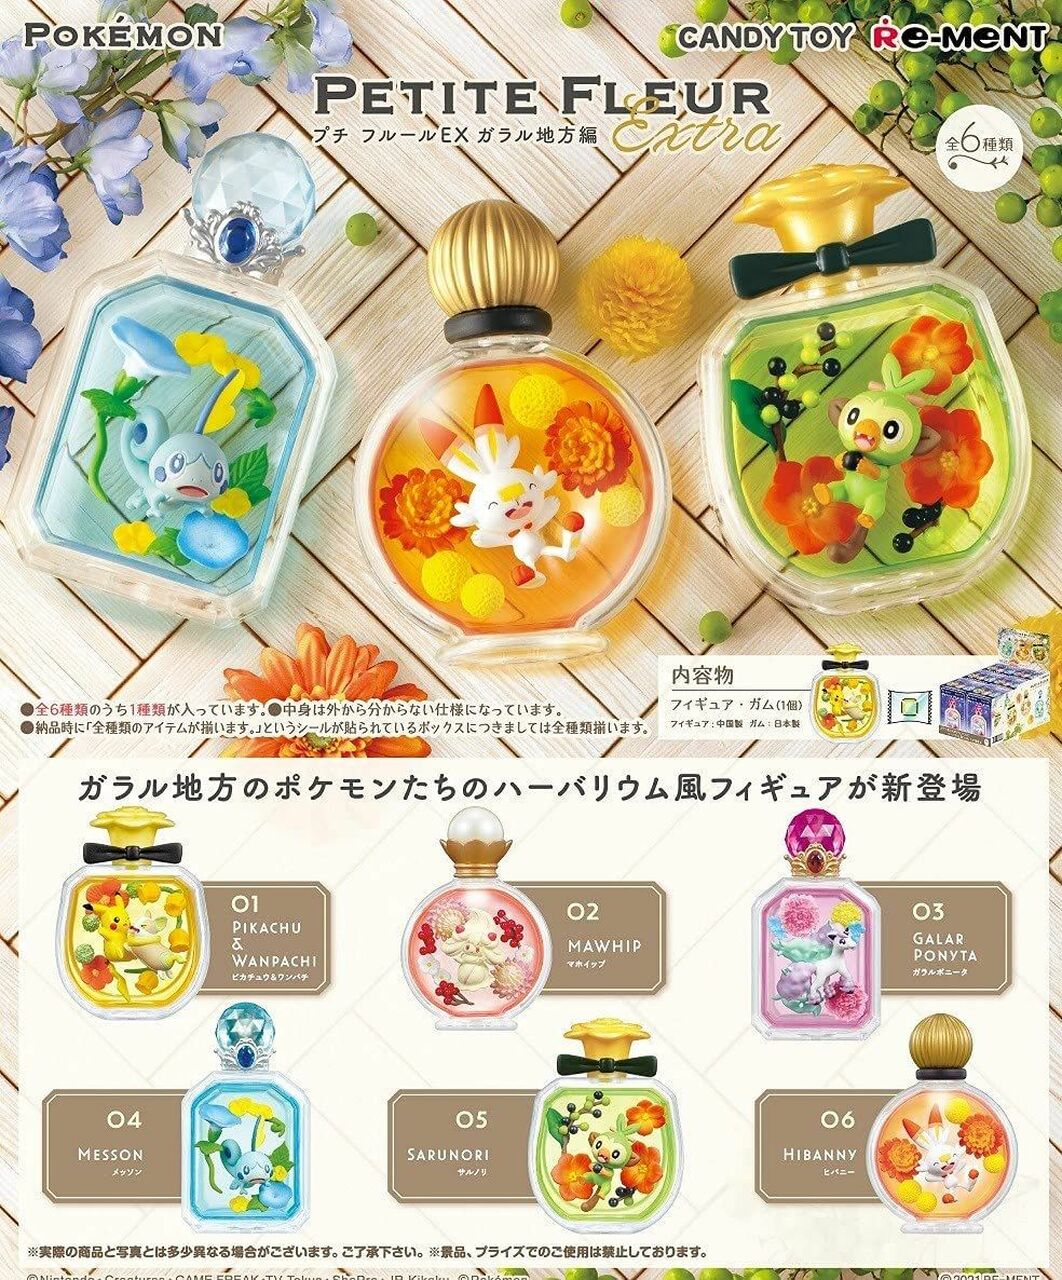 Re-Ment Pokemon Petite Fleur EX Galar Region Ver. Trading Figures Box Set of 6